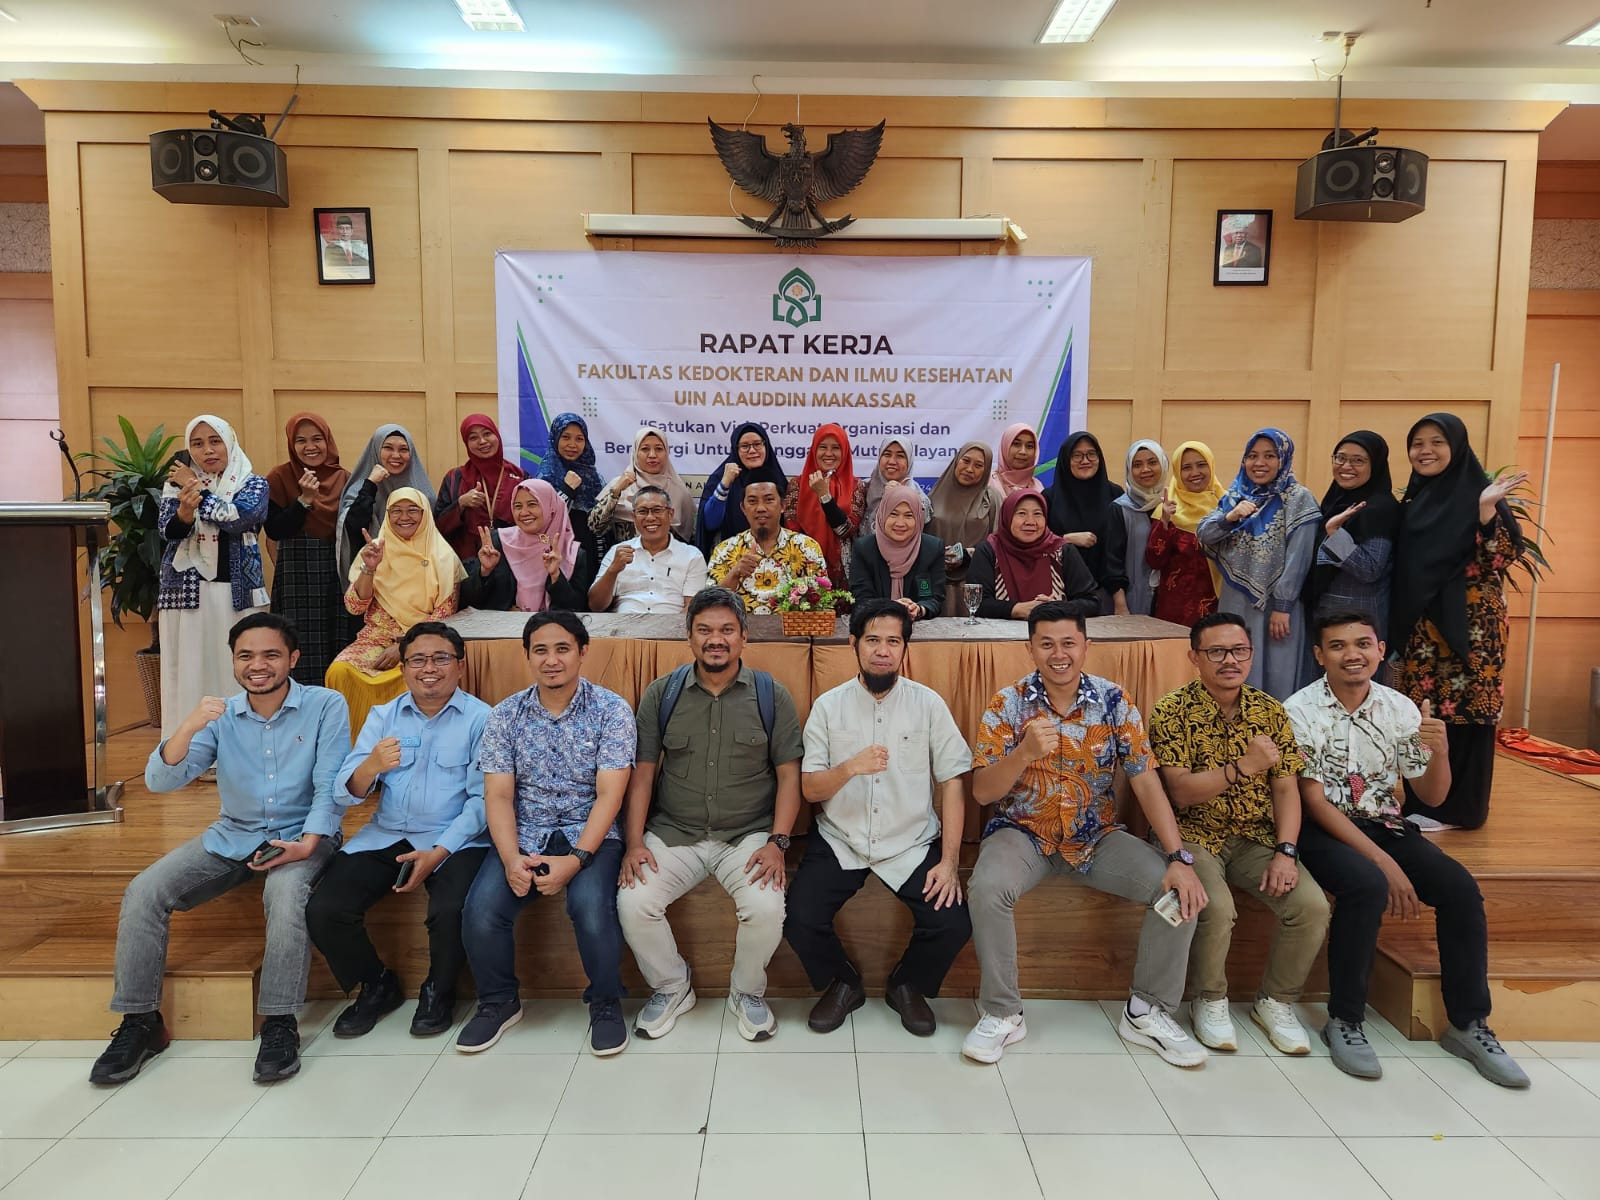 Rapat Kerja FKIK UIN Alauddin Makassar, Satukan Visi, Perkuat Organisasi dan Bersinergi untuk Menggapai Mutu Pelayanan